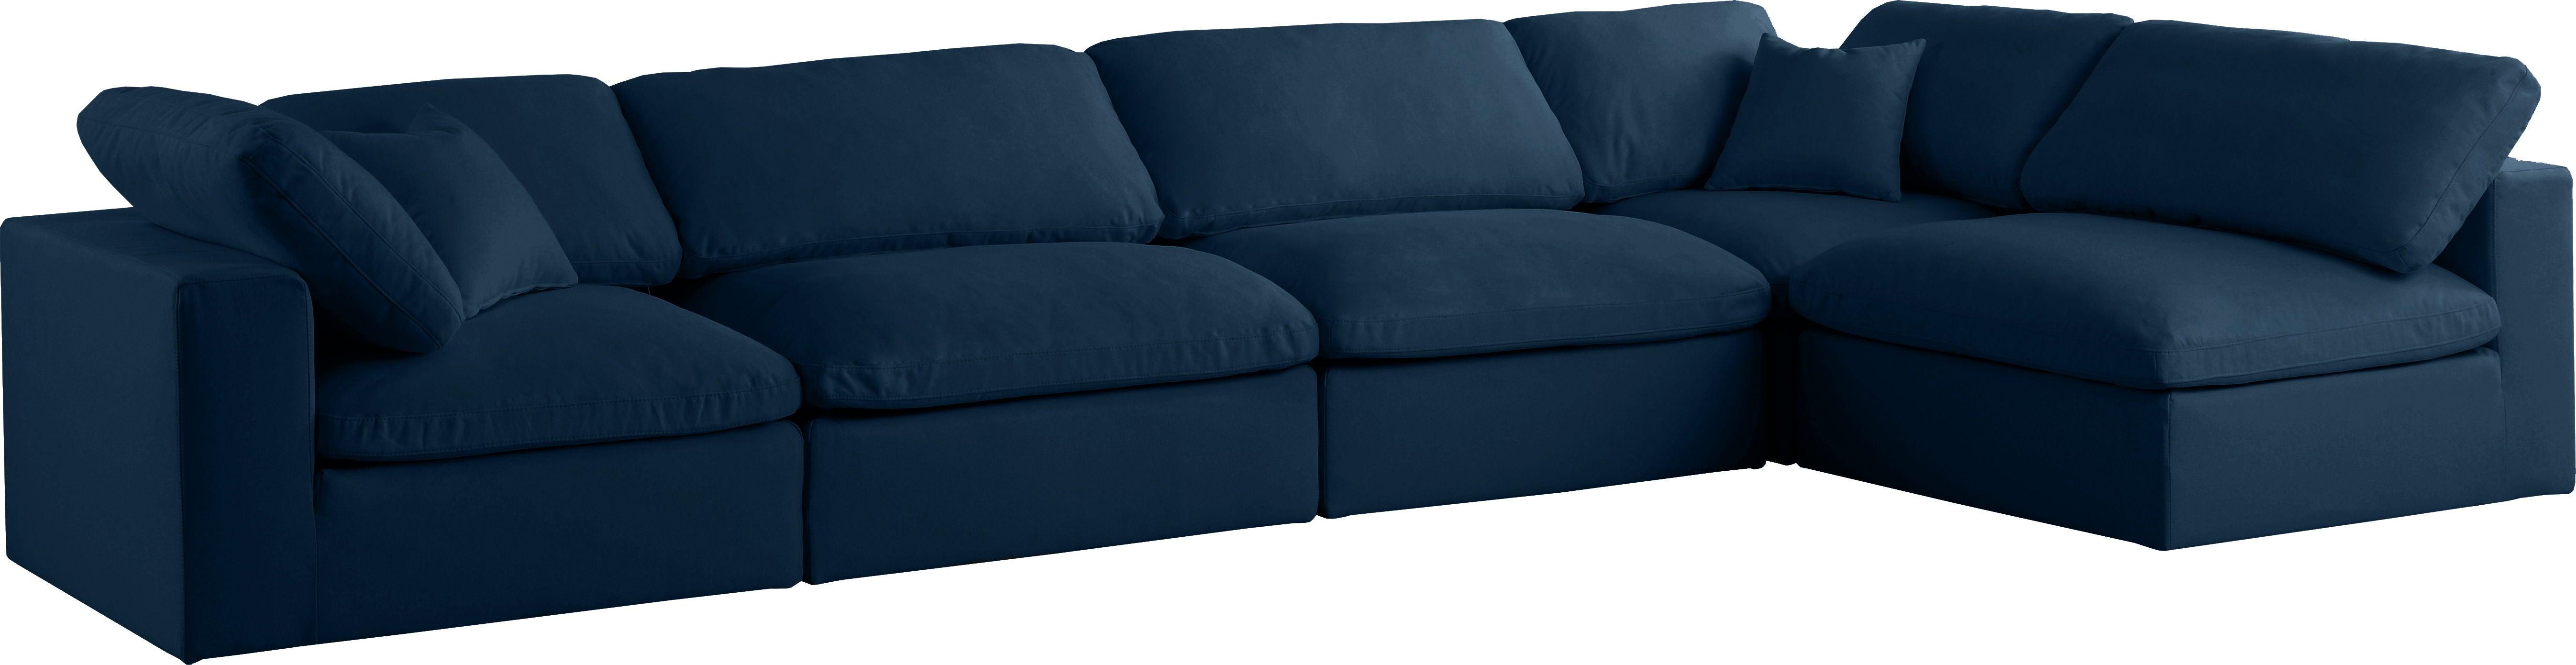 Meridian Furniture - Plush - Velvet Standart Comfort Modular Sectional 5 Piece - Navy - 5th Avenue Furniture